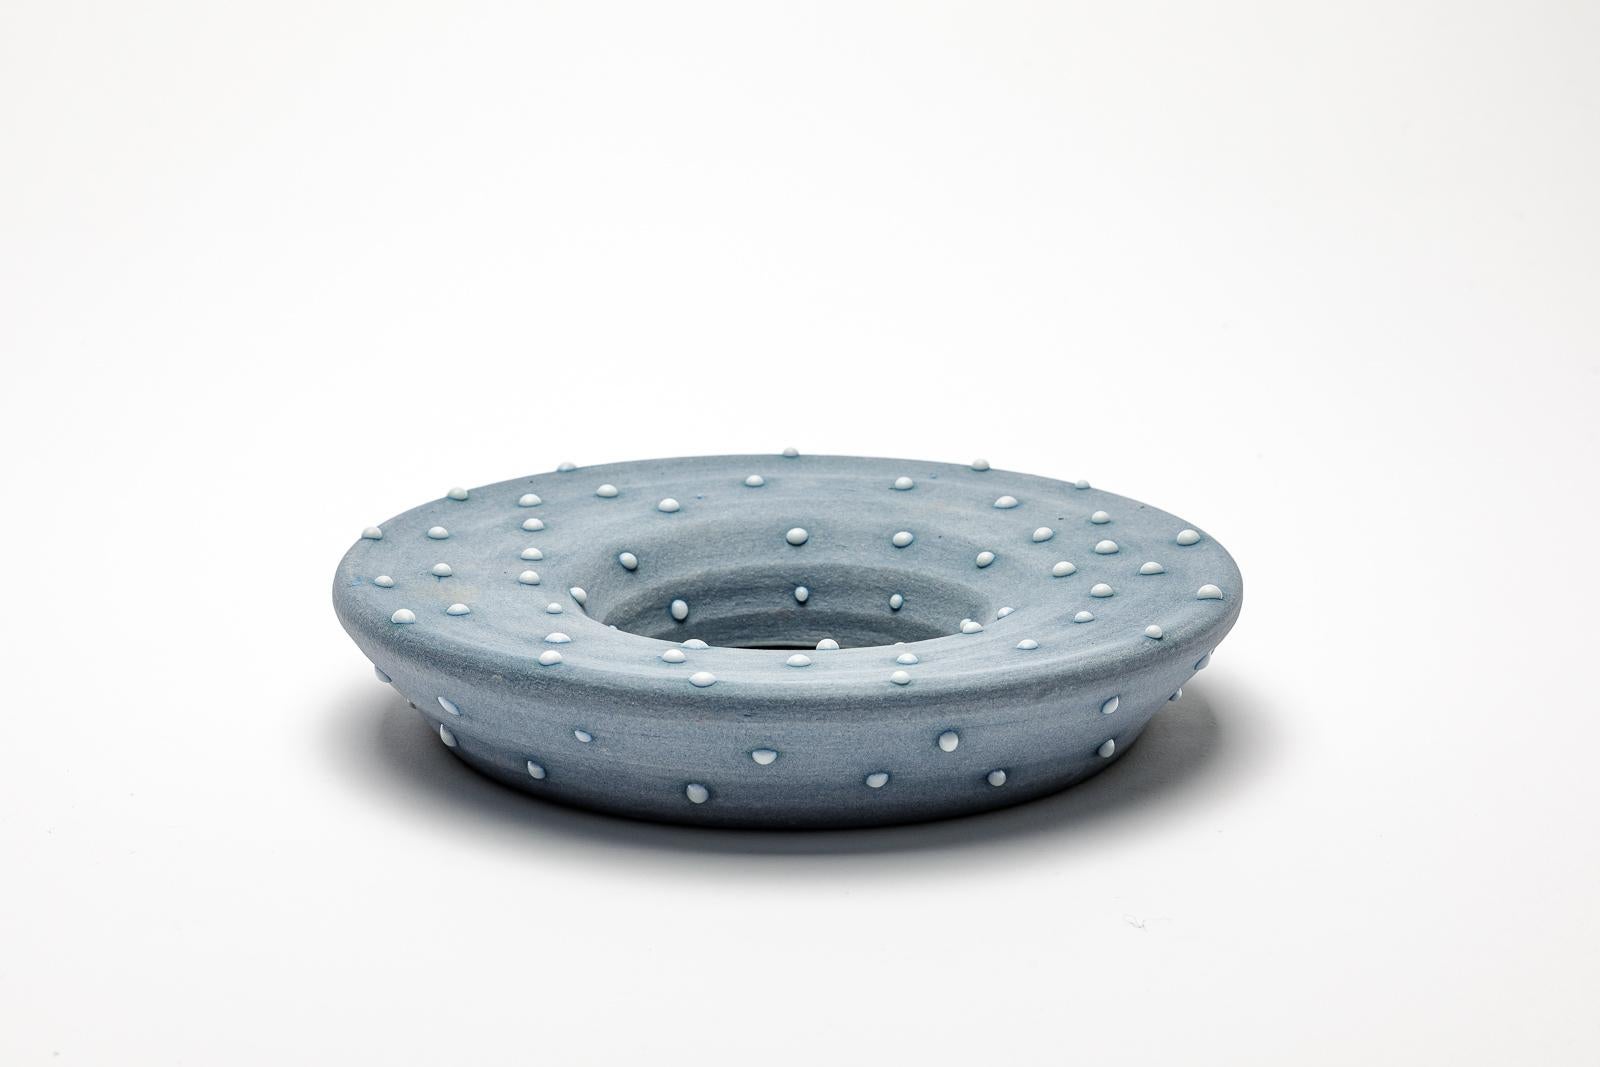 Blue glazed ceramic mirror with white dots by Mia Jensen.
Artist signature under the base. Circa 2023-2024.
H : 1.6’ x 8.1’ inches.
